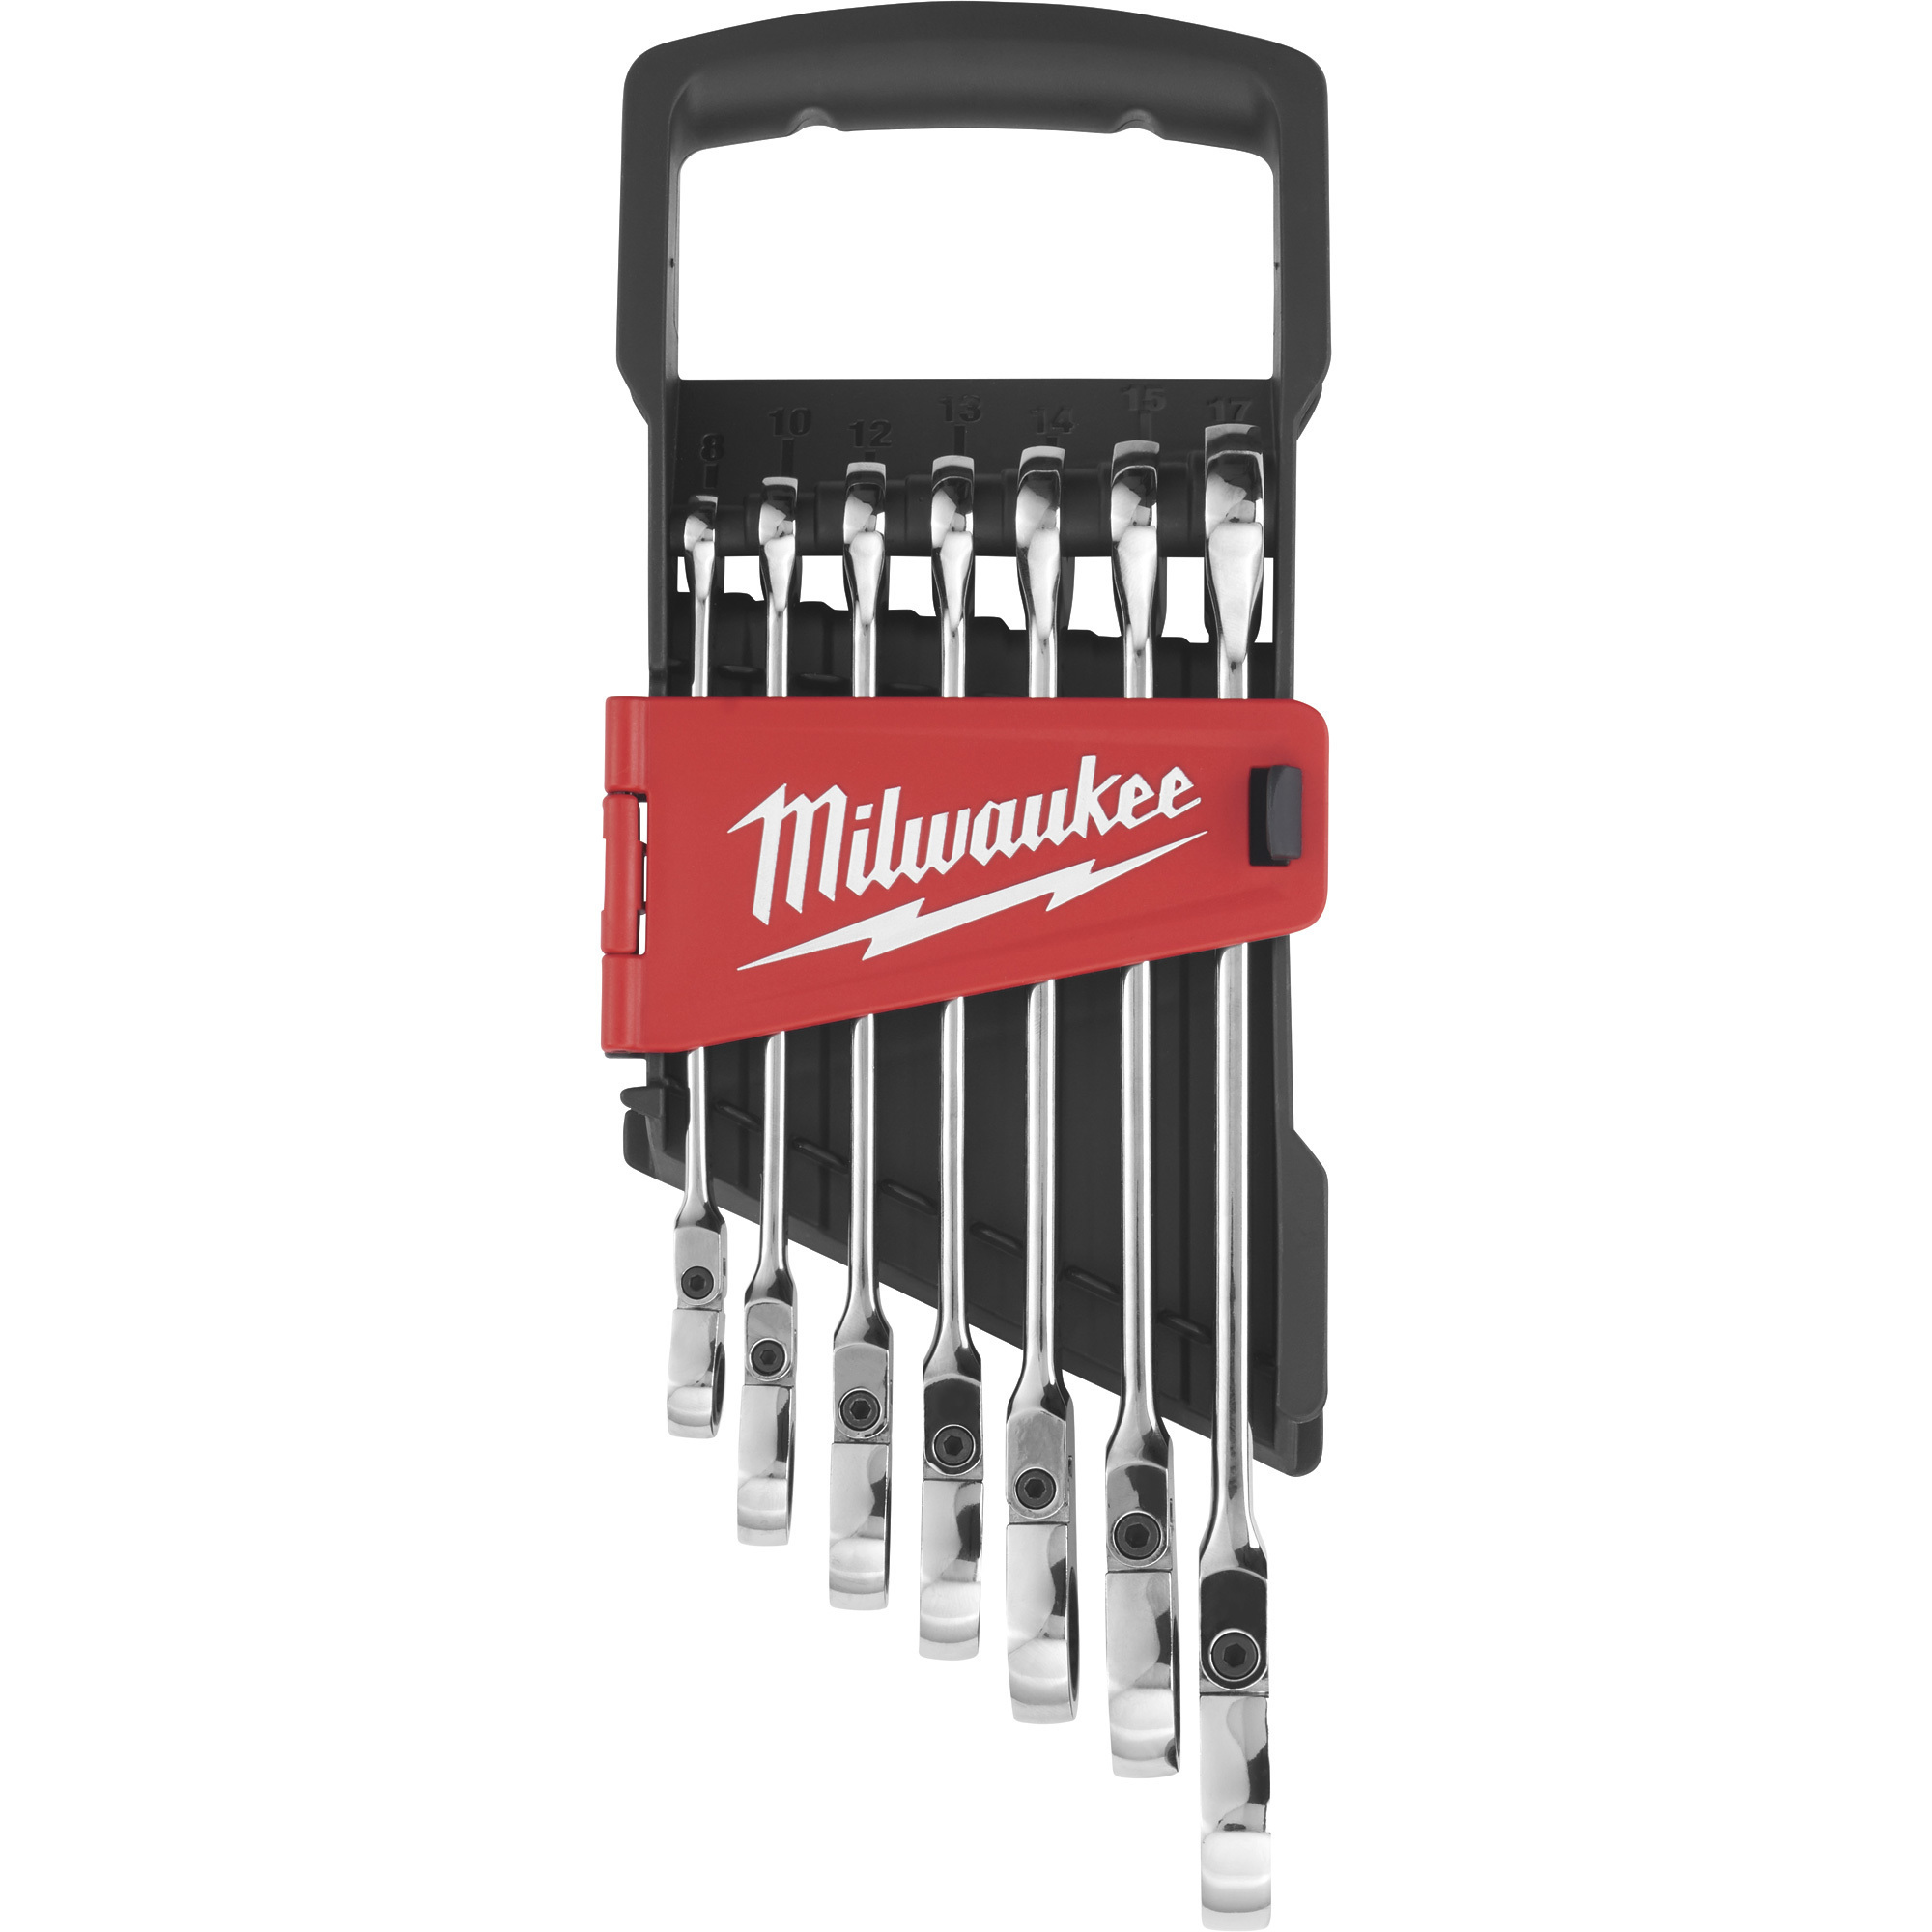 Flex Head Ratcheting Combination Wrench Set — 7-Piece, Metric, Model - Milwaukee 48-22-9529